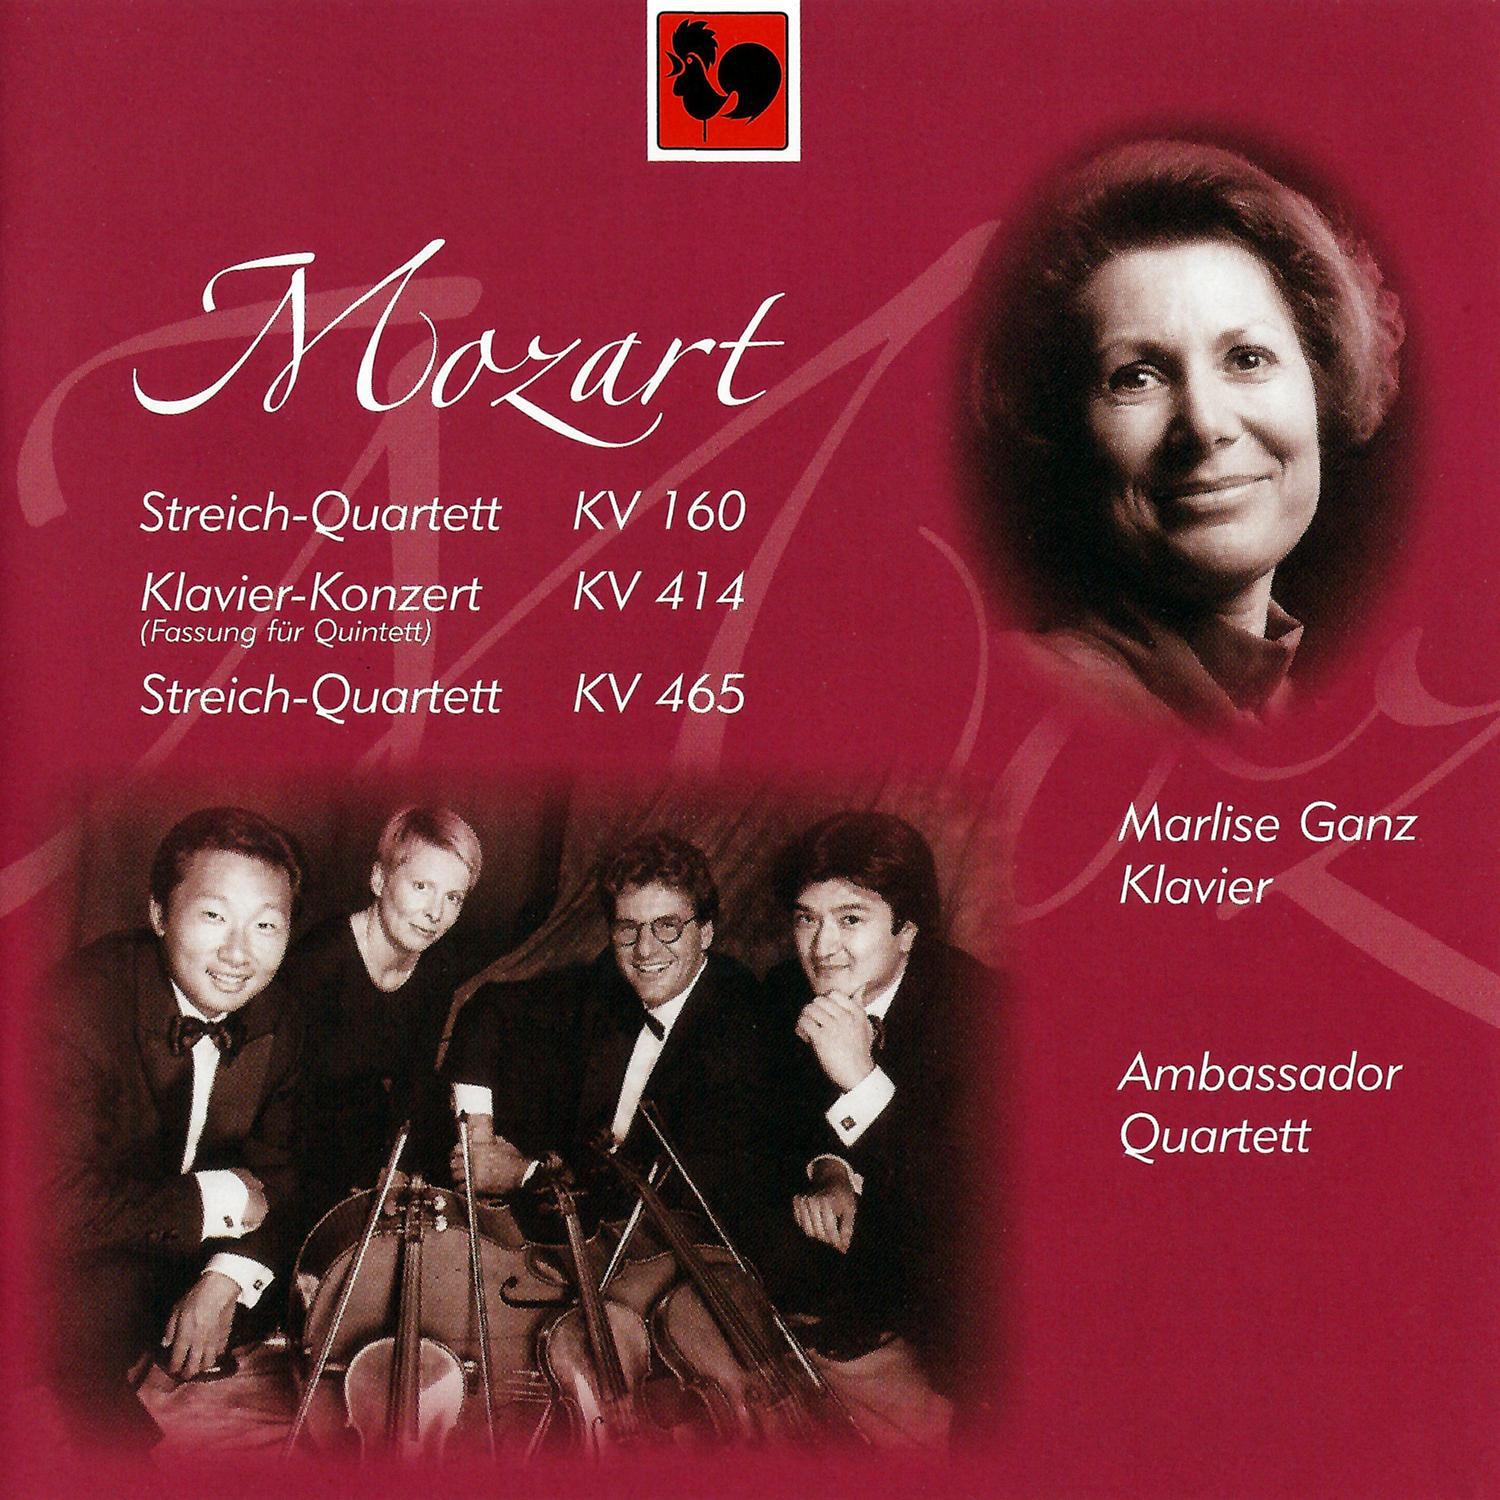 Mozart: String Quartet No. 7 in E-Flat Major, K. 160 - Piano Cocerto No. 12 in A Major, K. 414 - String Quartet No. 19 in C Major, K. 465